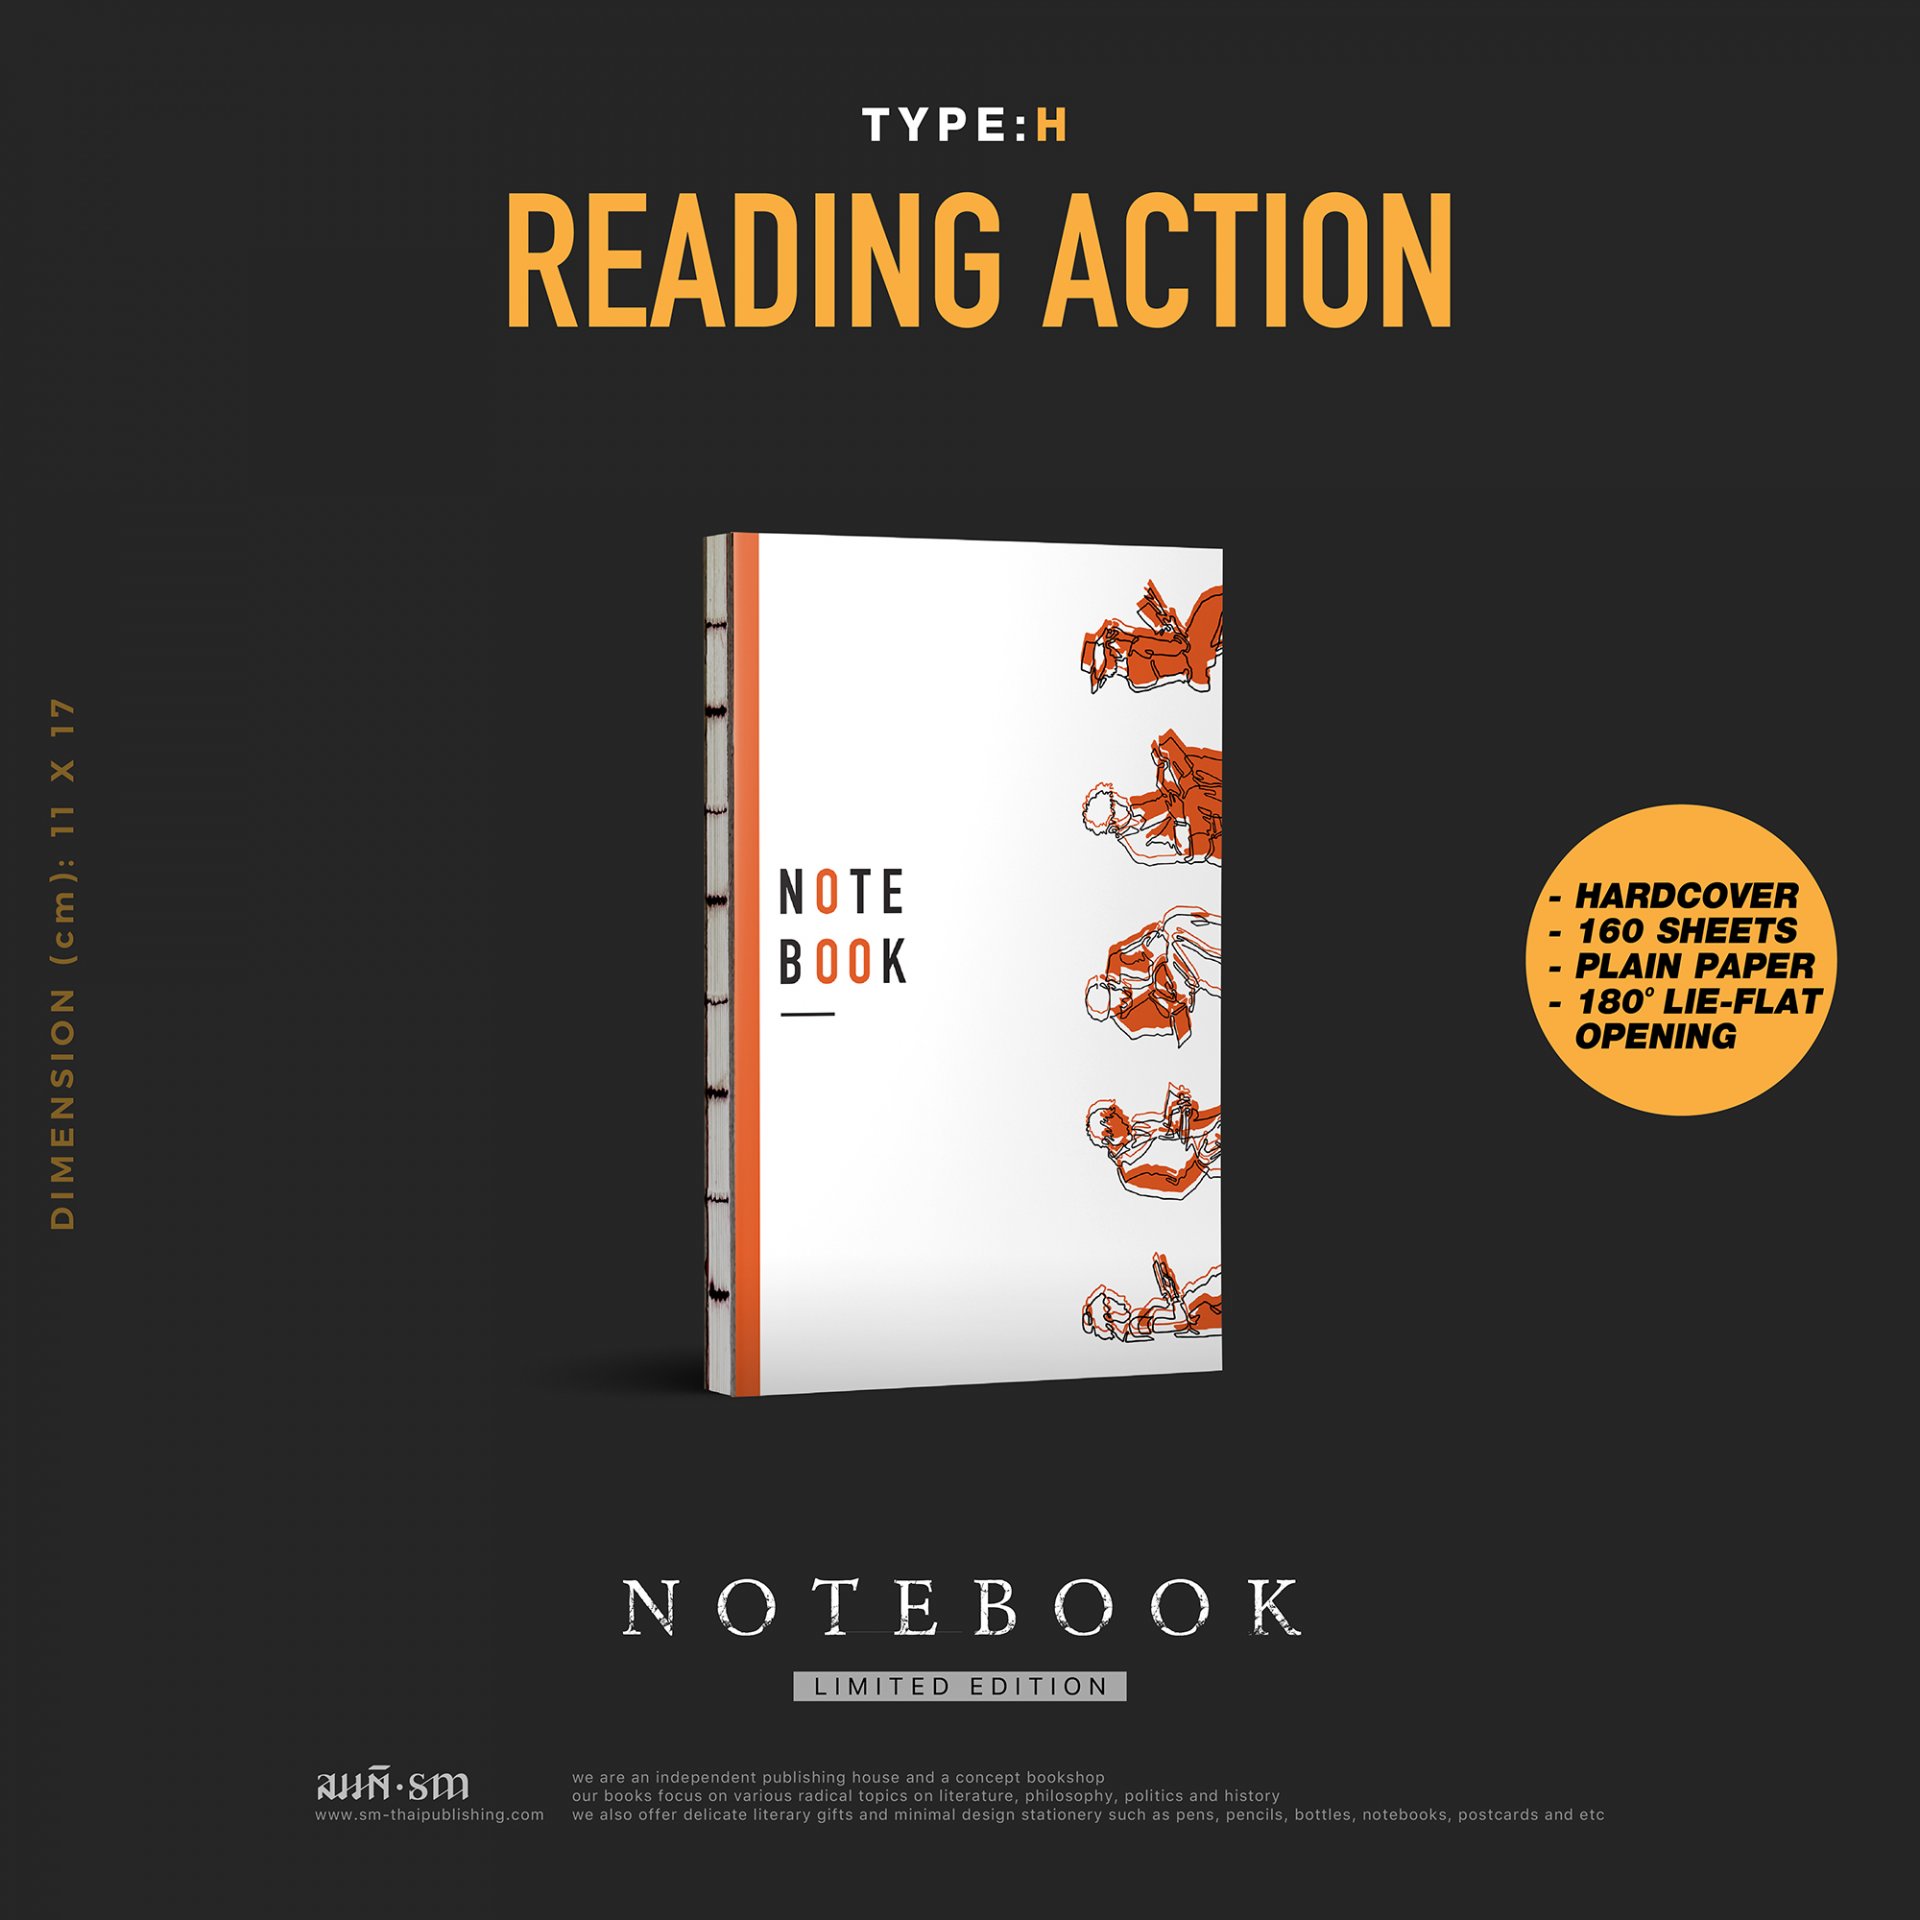 Notebook Reading Action H | สมุดโน้ตรูปวาดการอ่าน